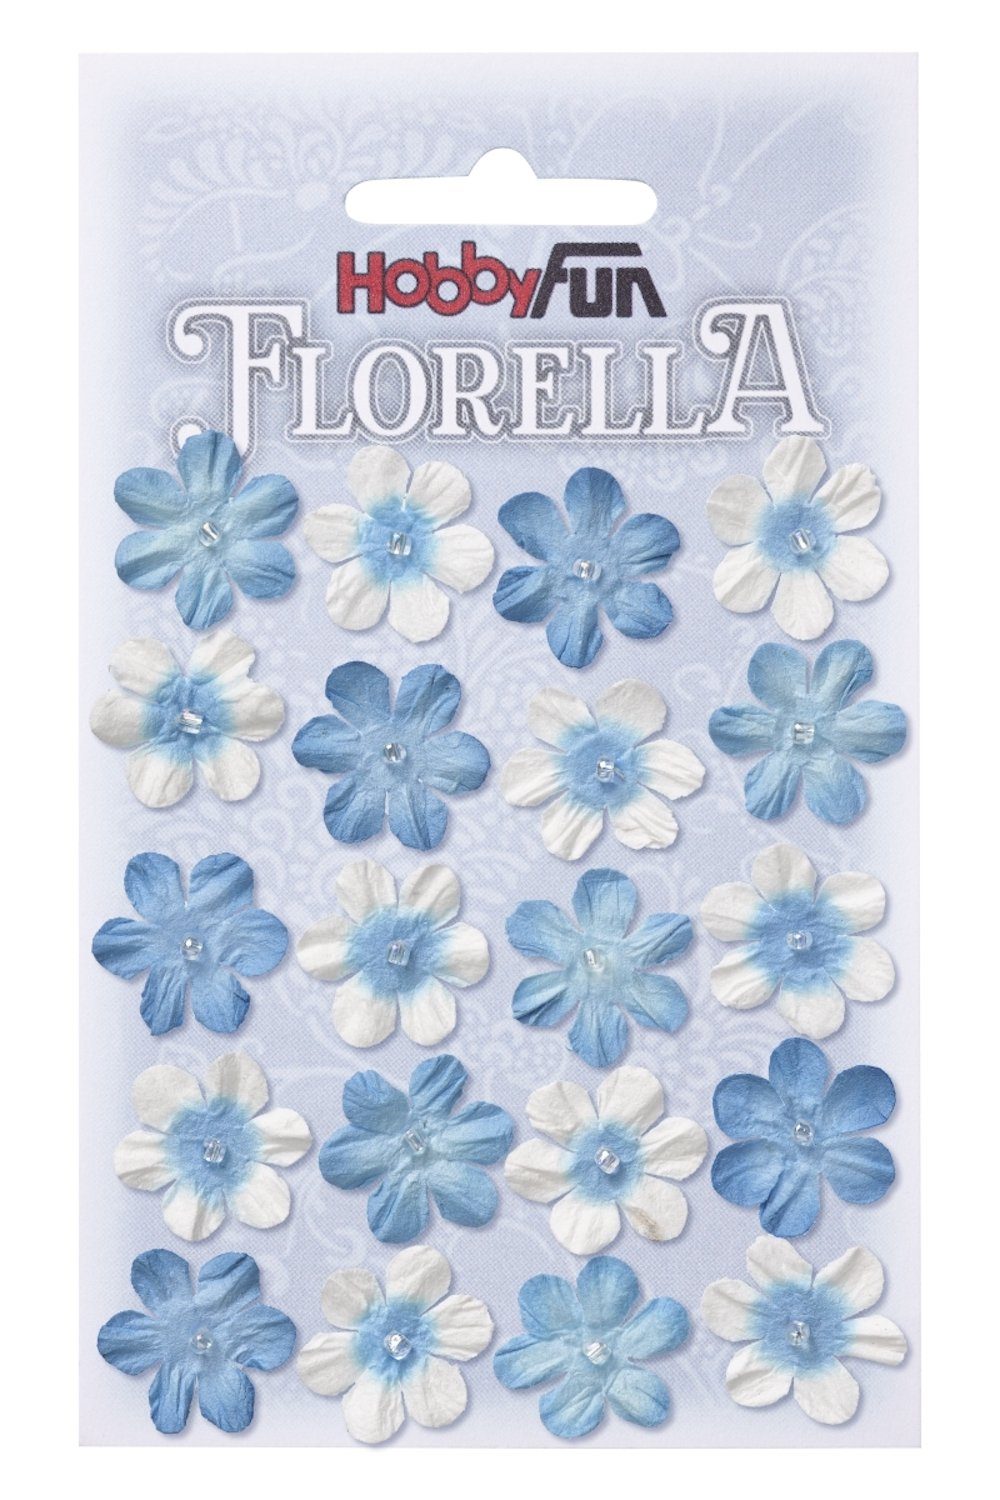 cm, HobbyFun Maulbeer-Papier, Dekofigur blau, aus B 2 FLORELLA-Blüten